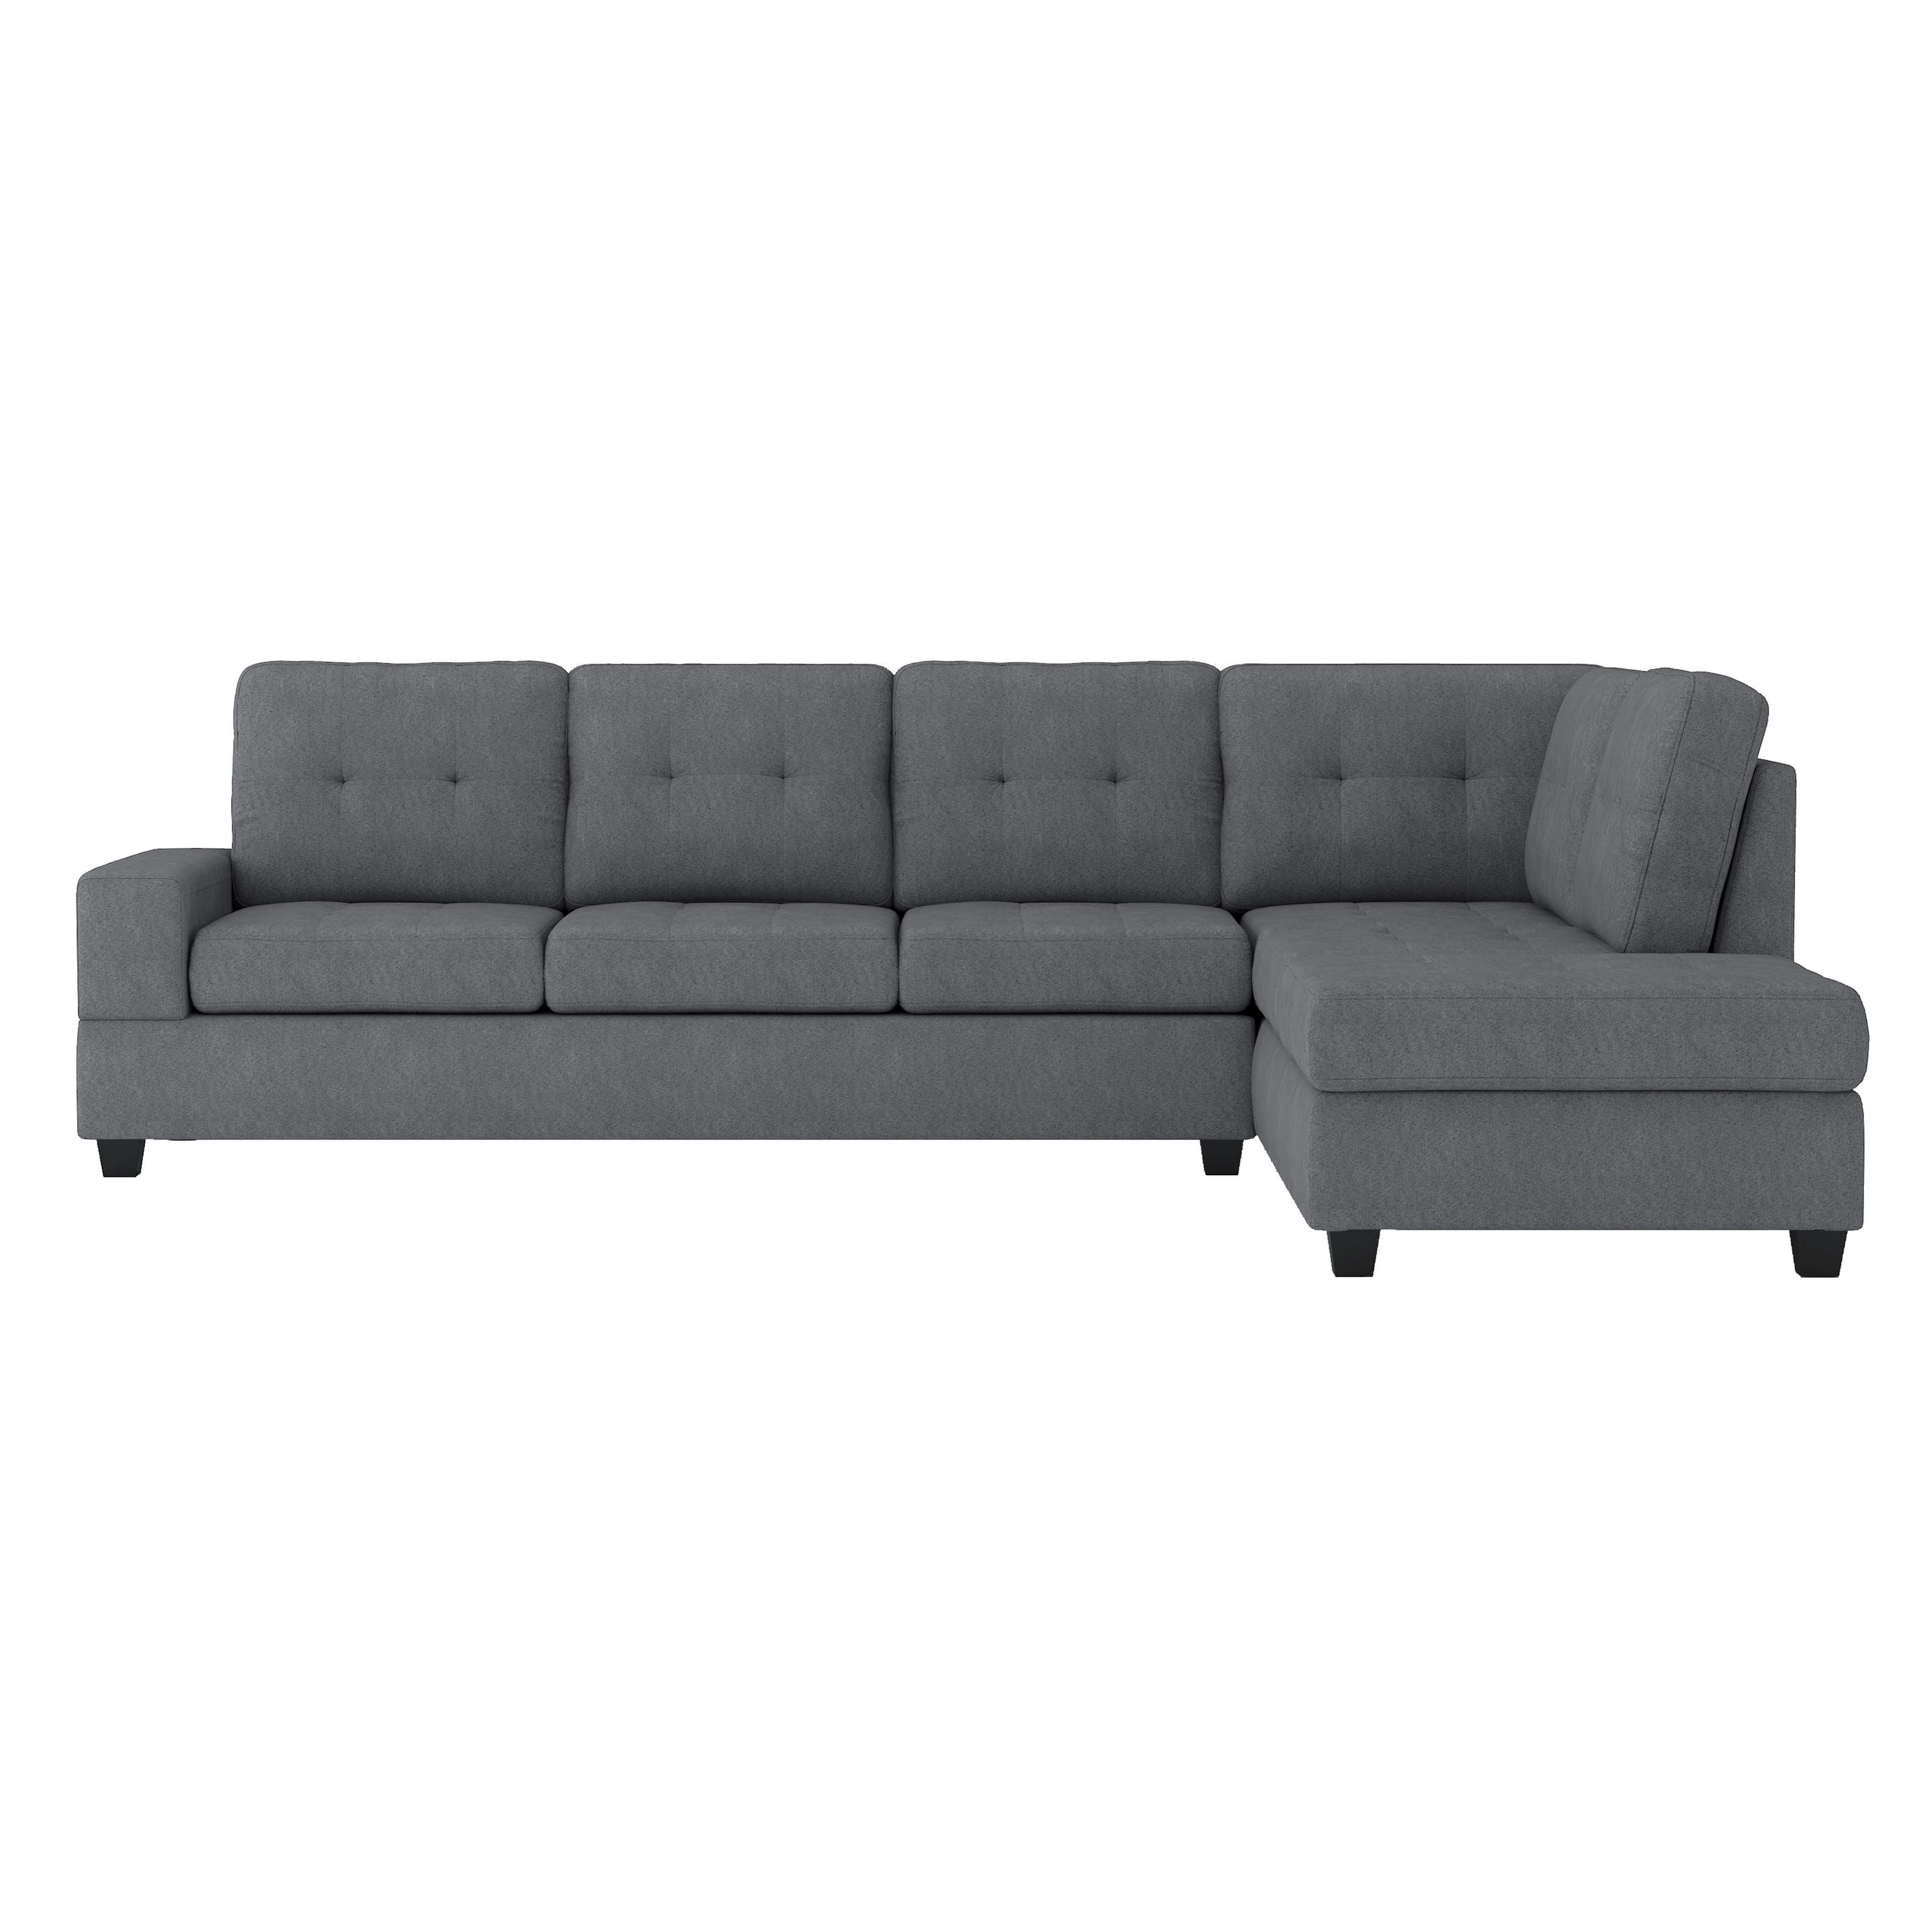 Maston Reversible Sectional Sofa Collection Dark Grey 9507